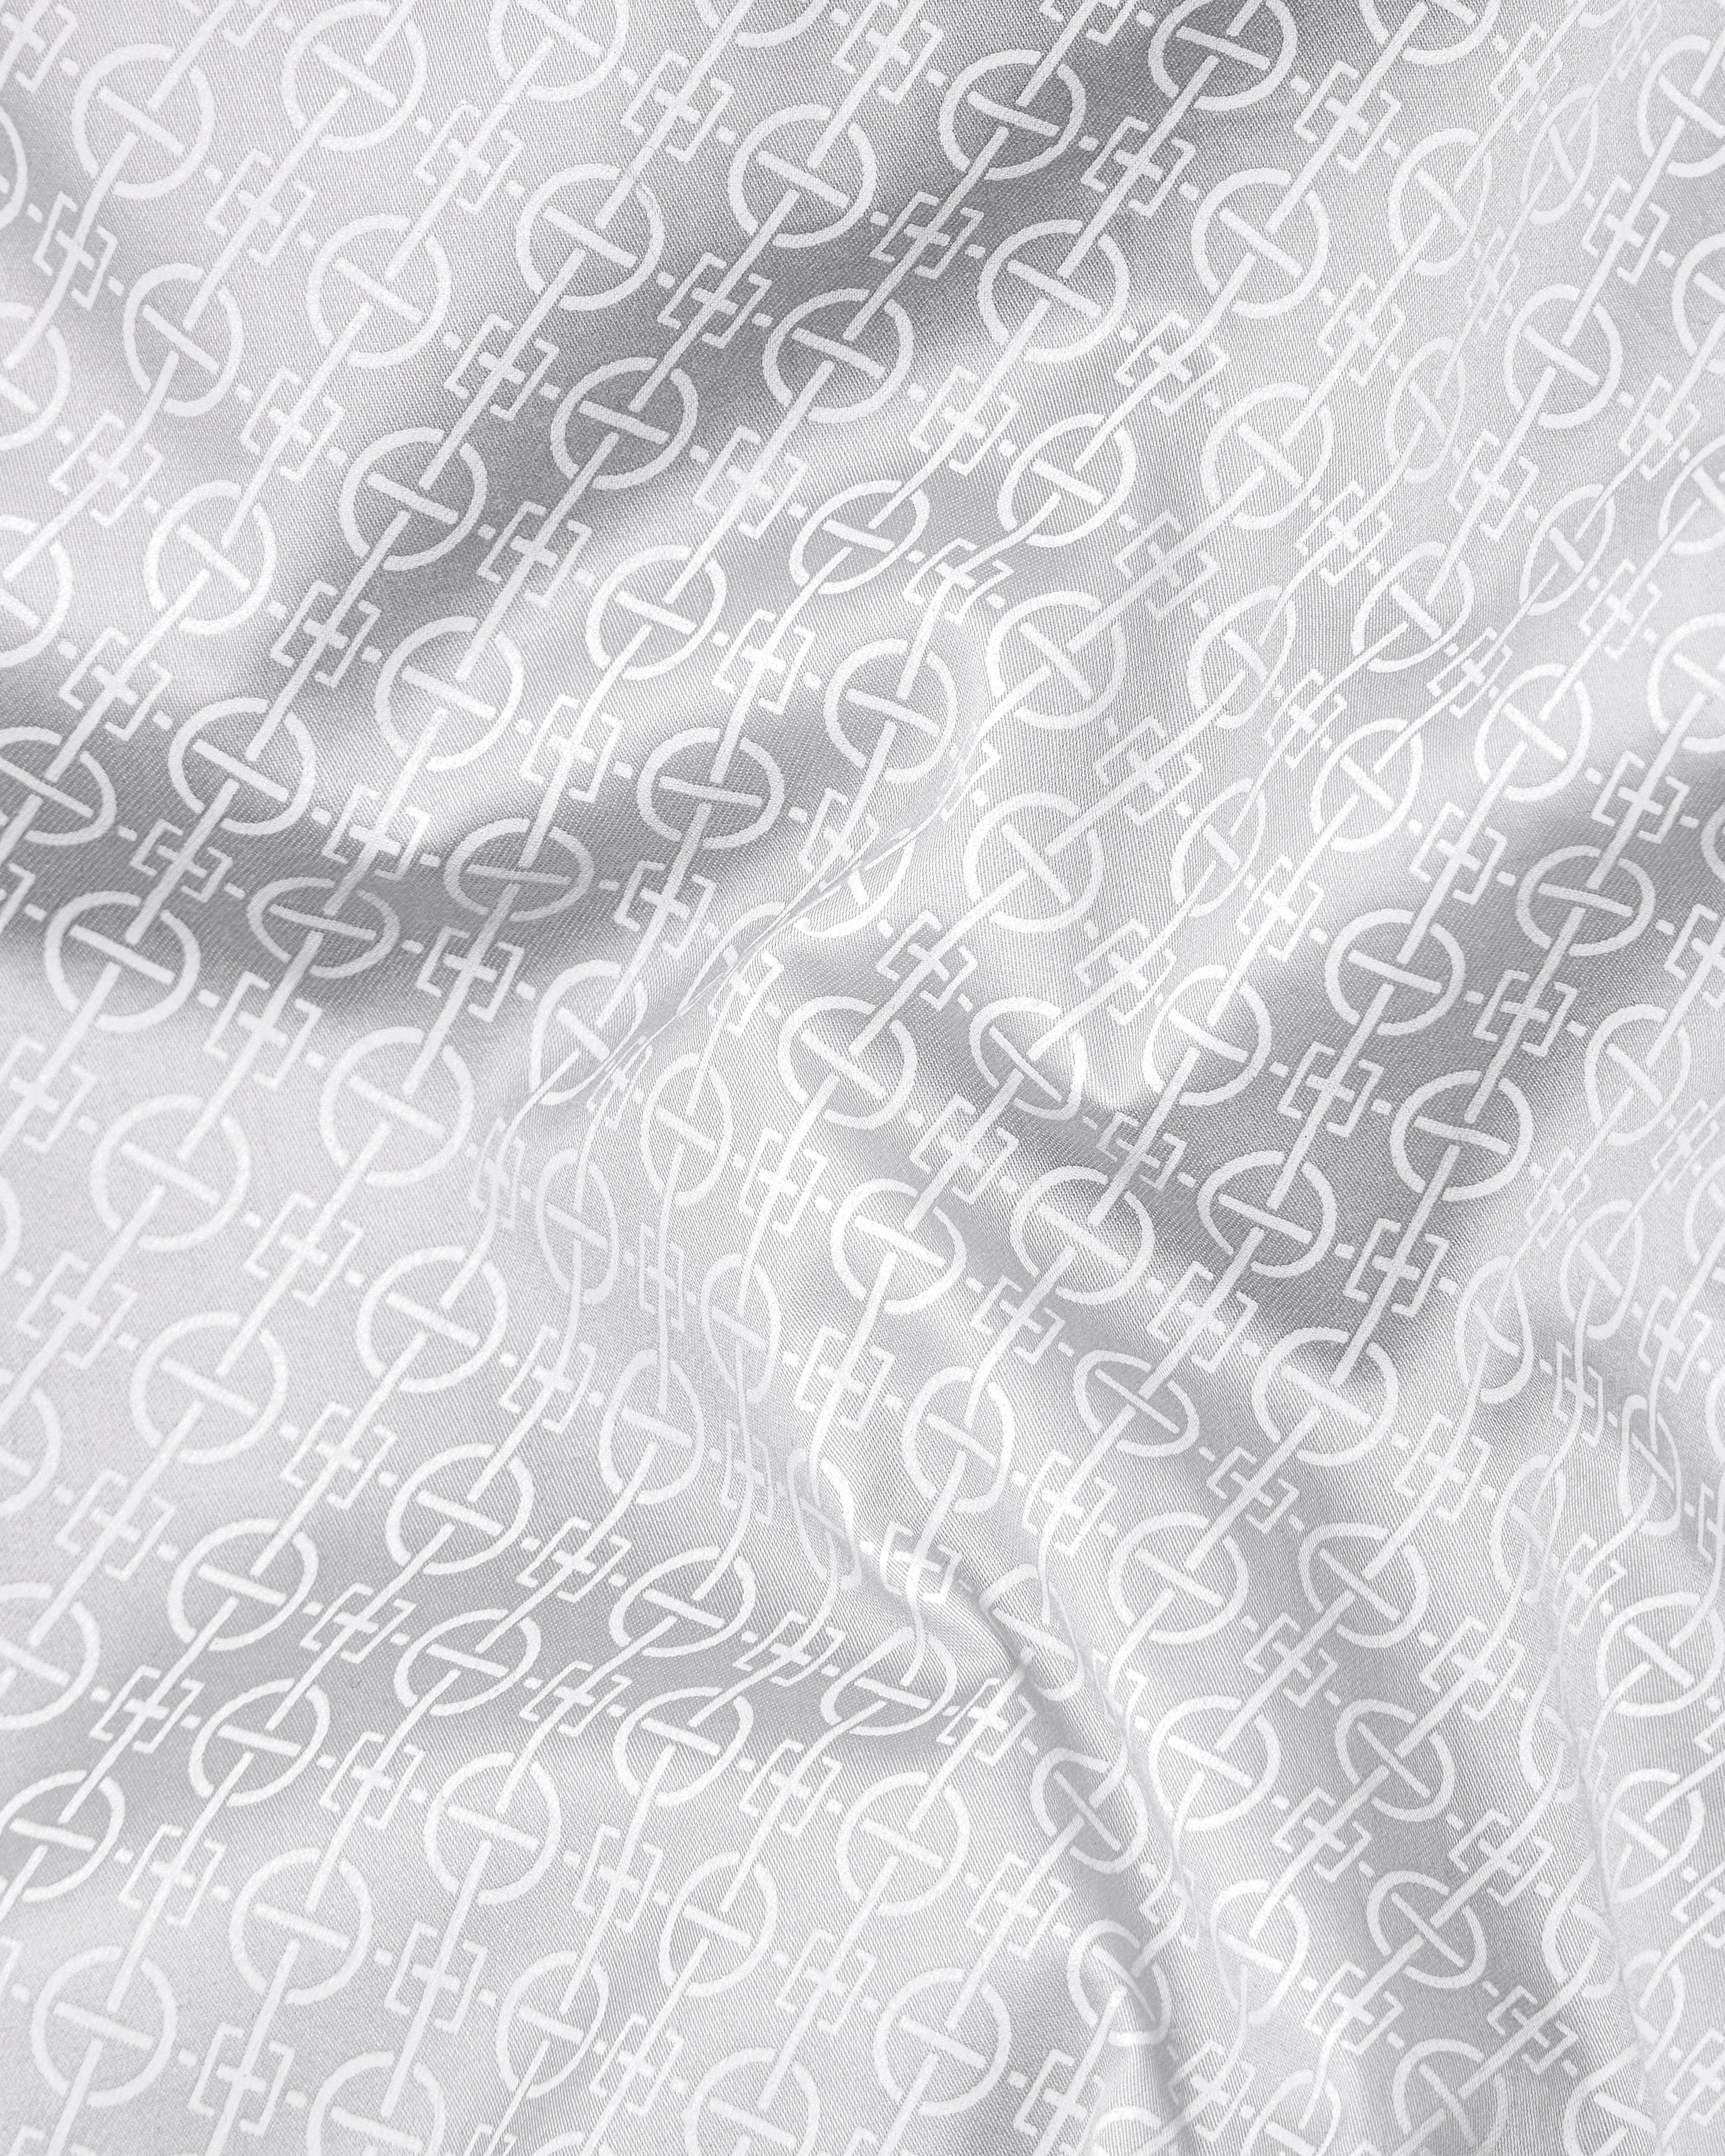 Nebula Gray and White Printed Super Soft Premium Cotton Shorts SR206-28, SR206-30, SR206-32, SR206-34, SR206-36, SR206-38, SR206-40, SR206-42, SR206-44